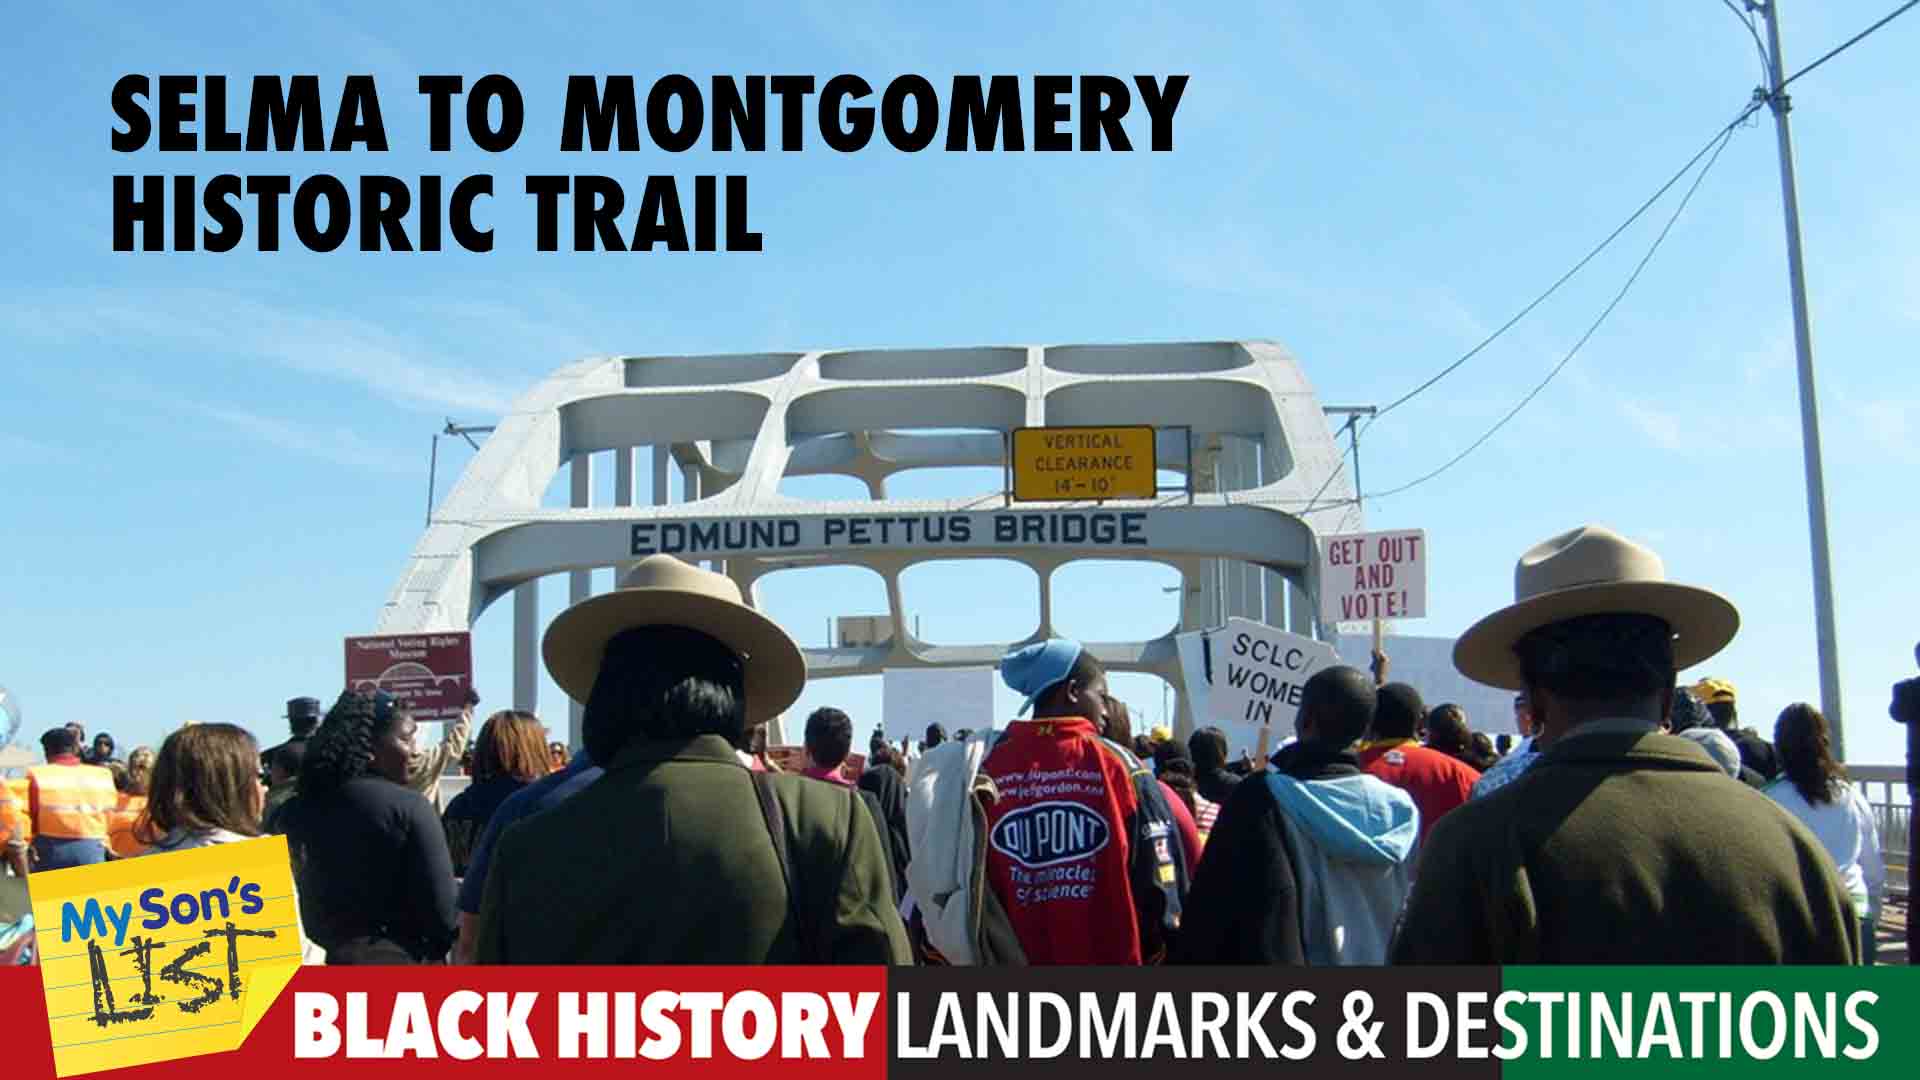 African-American Landmarks: Selma to Montgomery Historic Trail